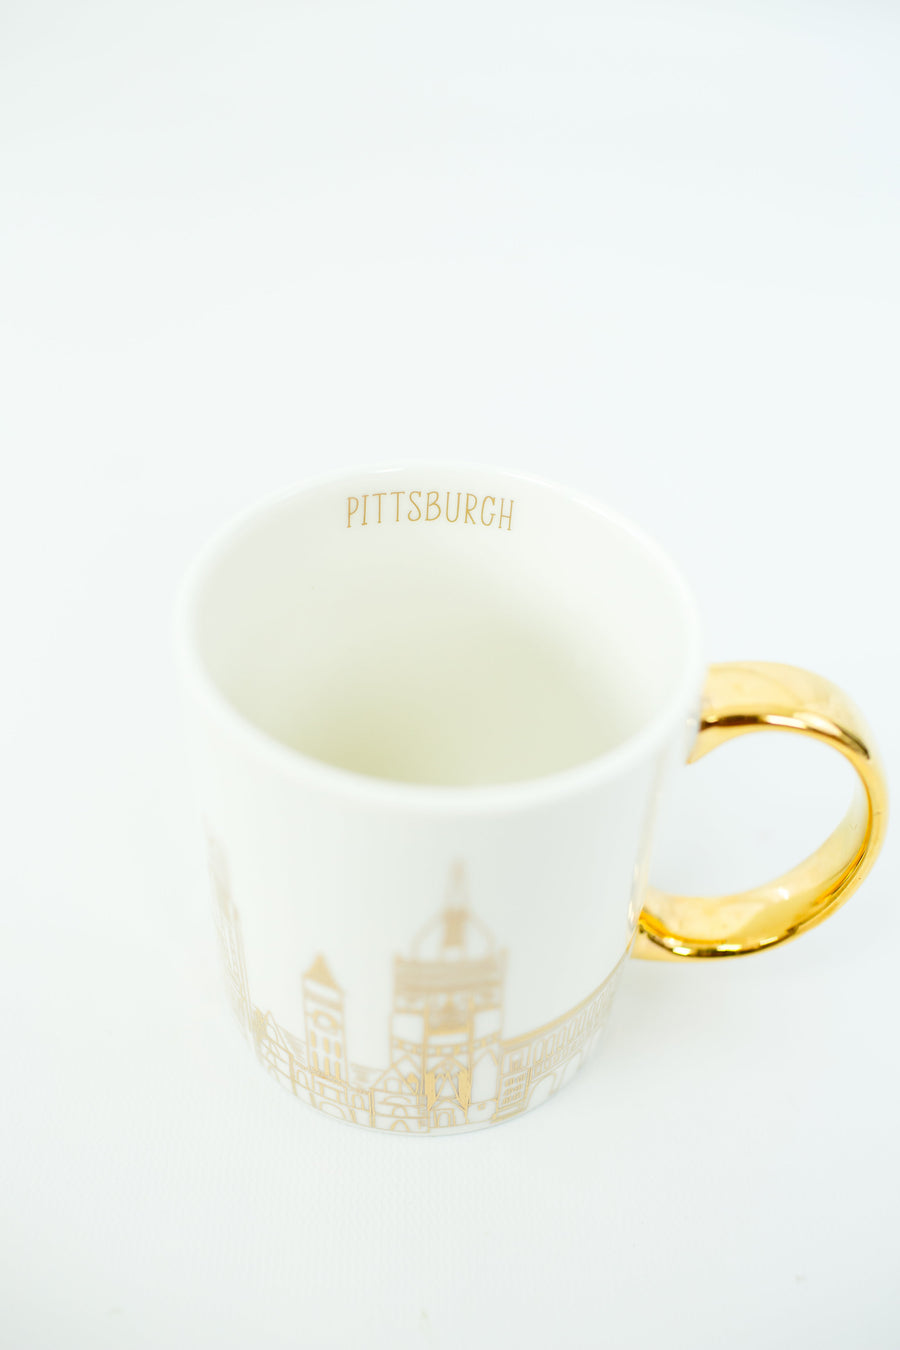 Pittsburgh Skyline Mug